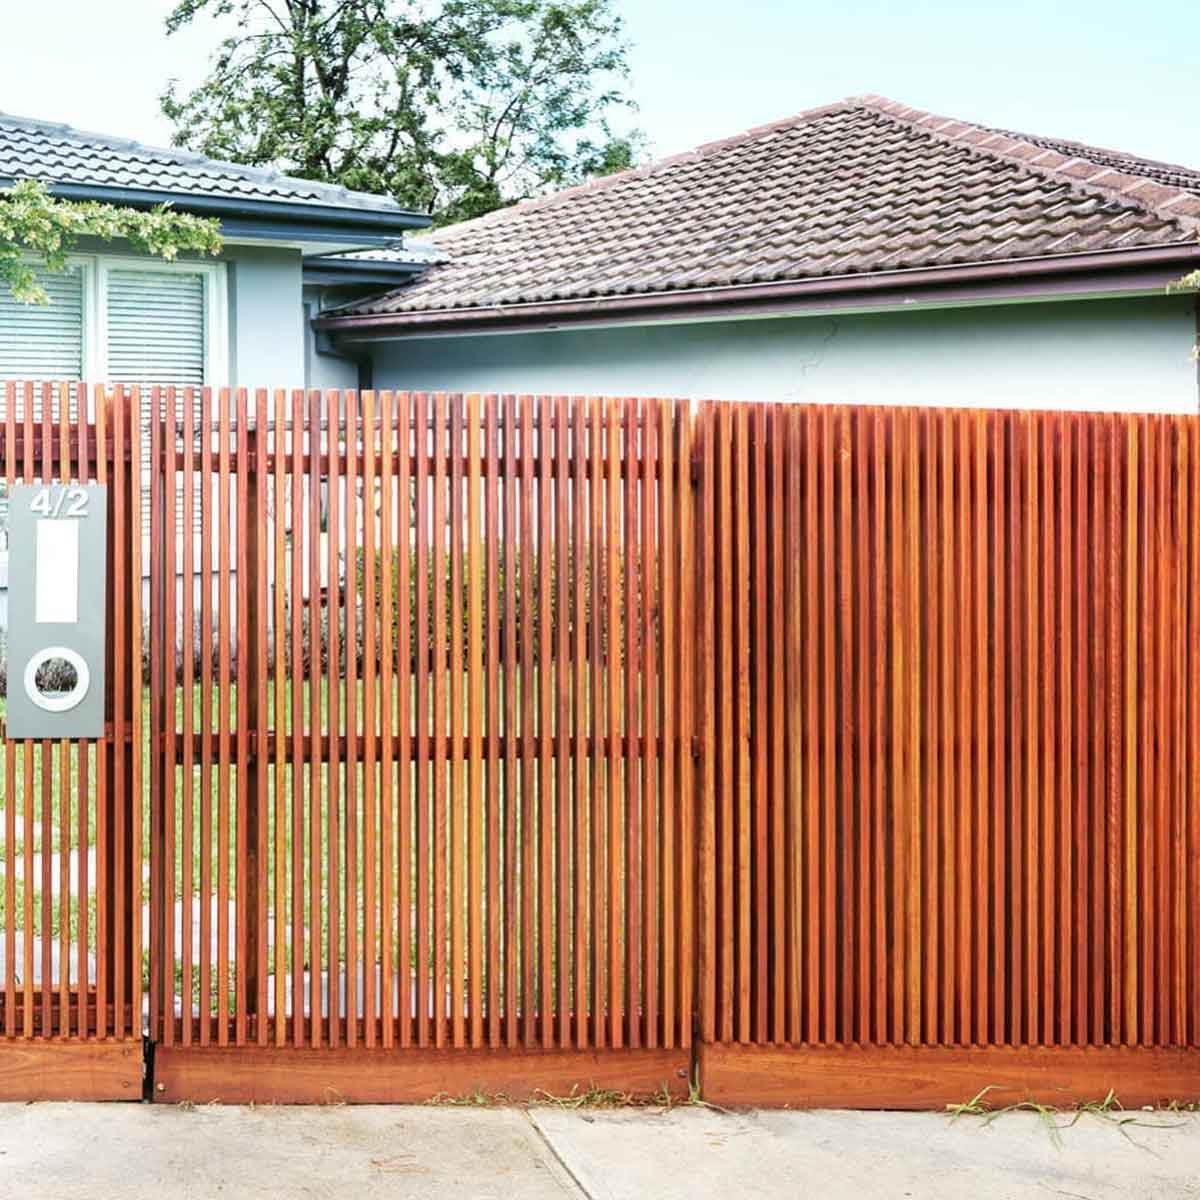 10 Interesting Front Yard Fence Ideas | The Family Handyman